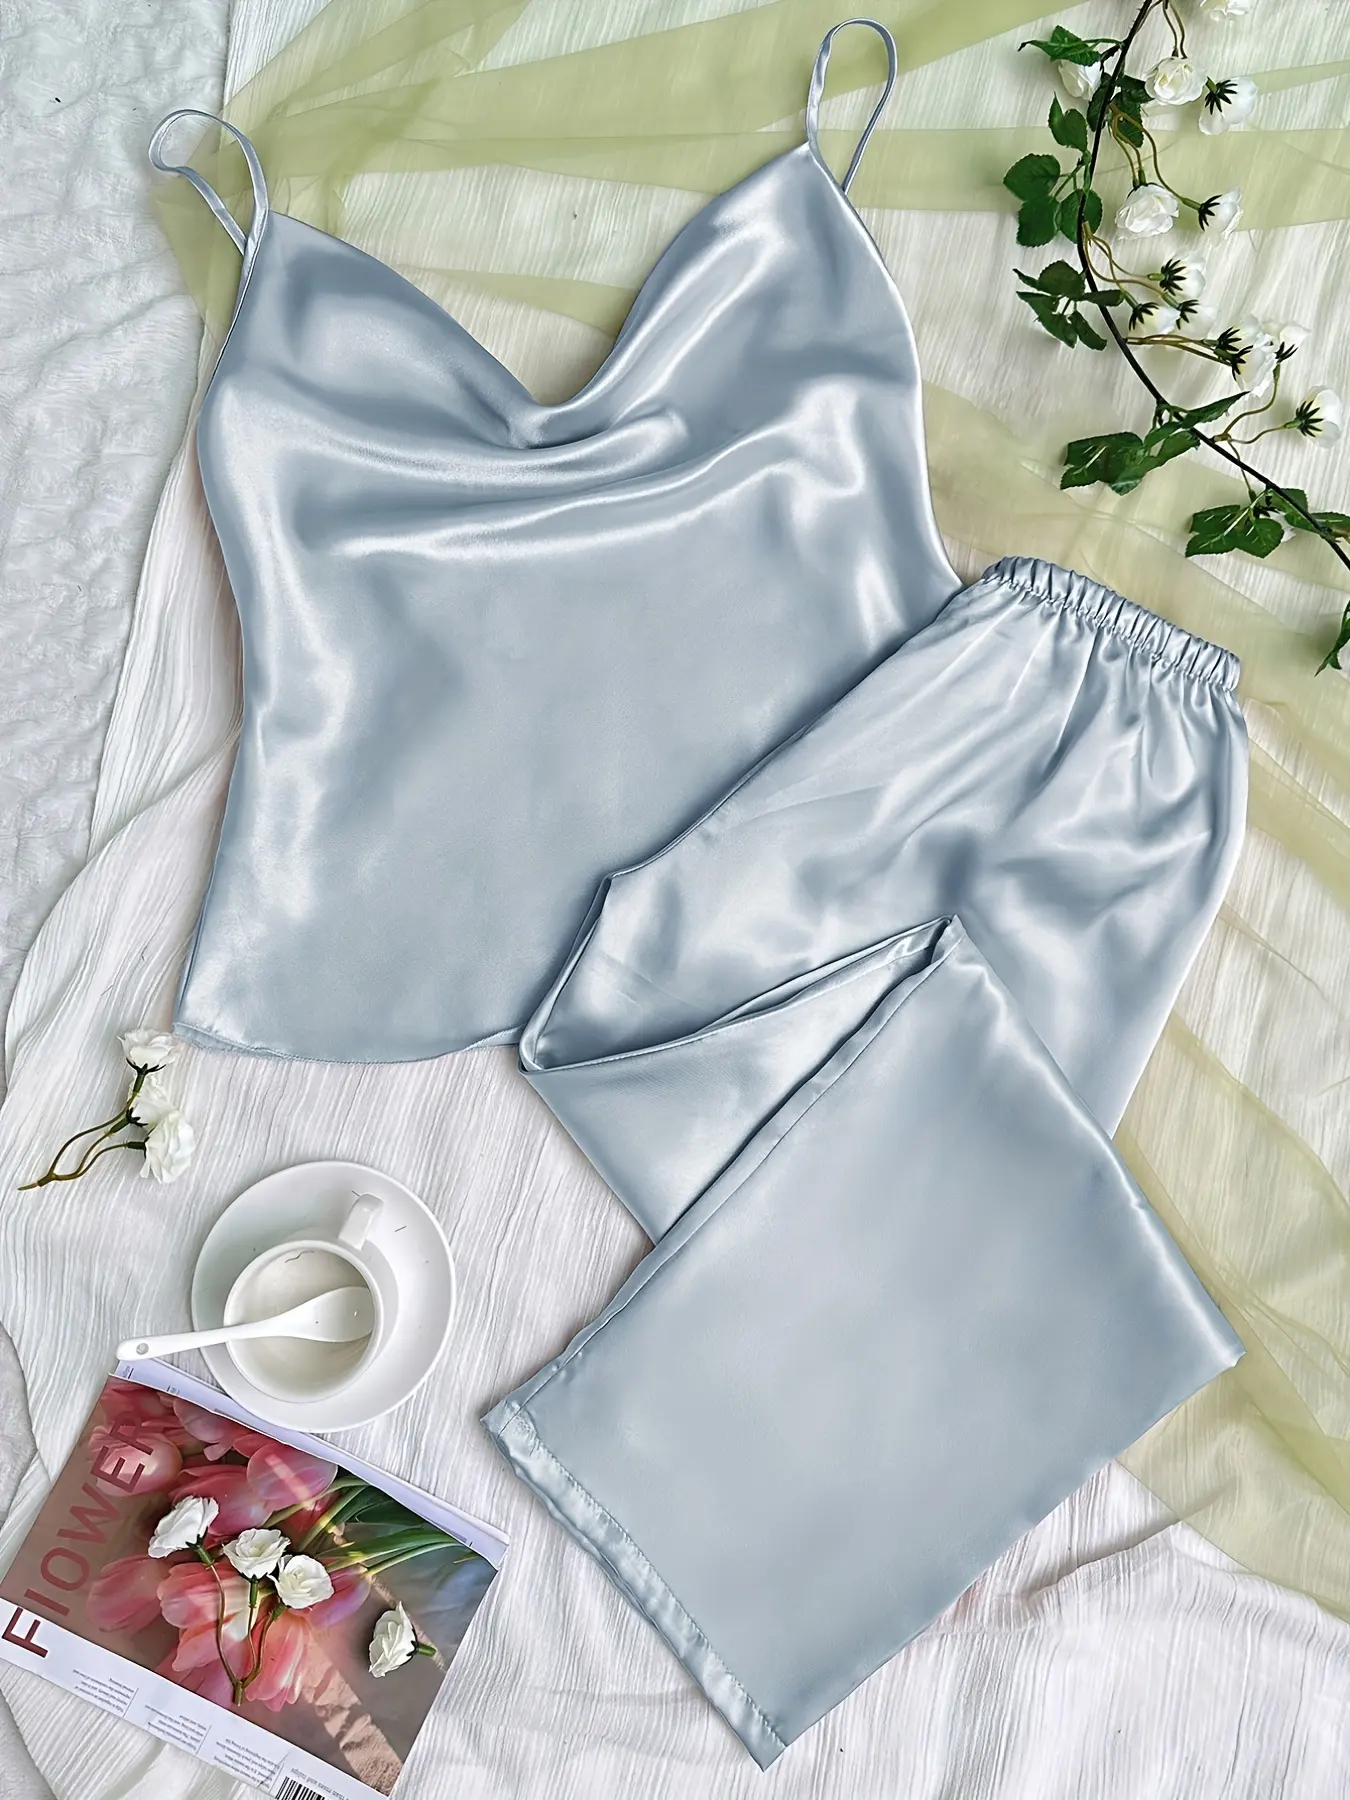 Set piyama Satin Solid, atasan Cami leher V & celana pinggang elastis, pakaian tidur wanita & pakaian santai